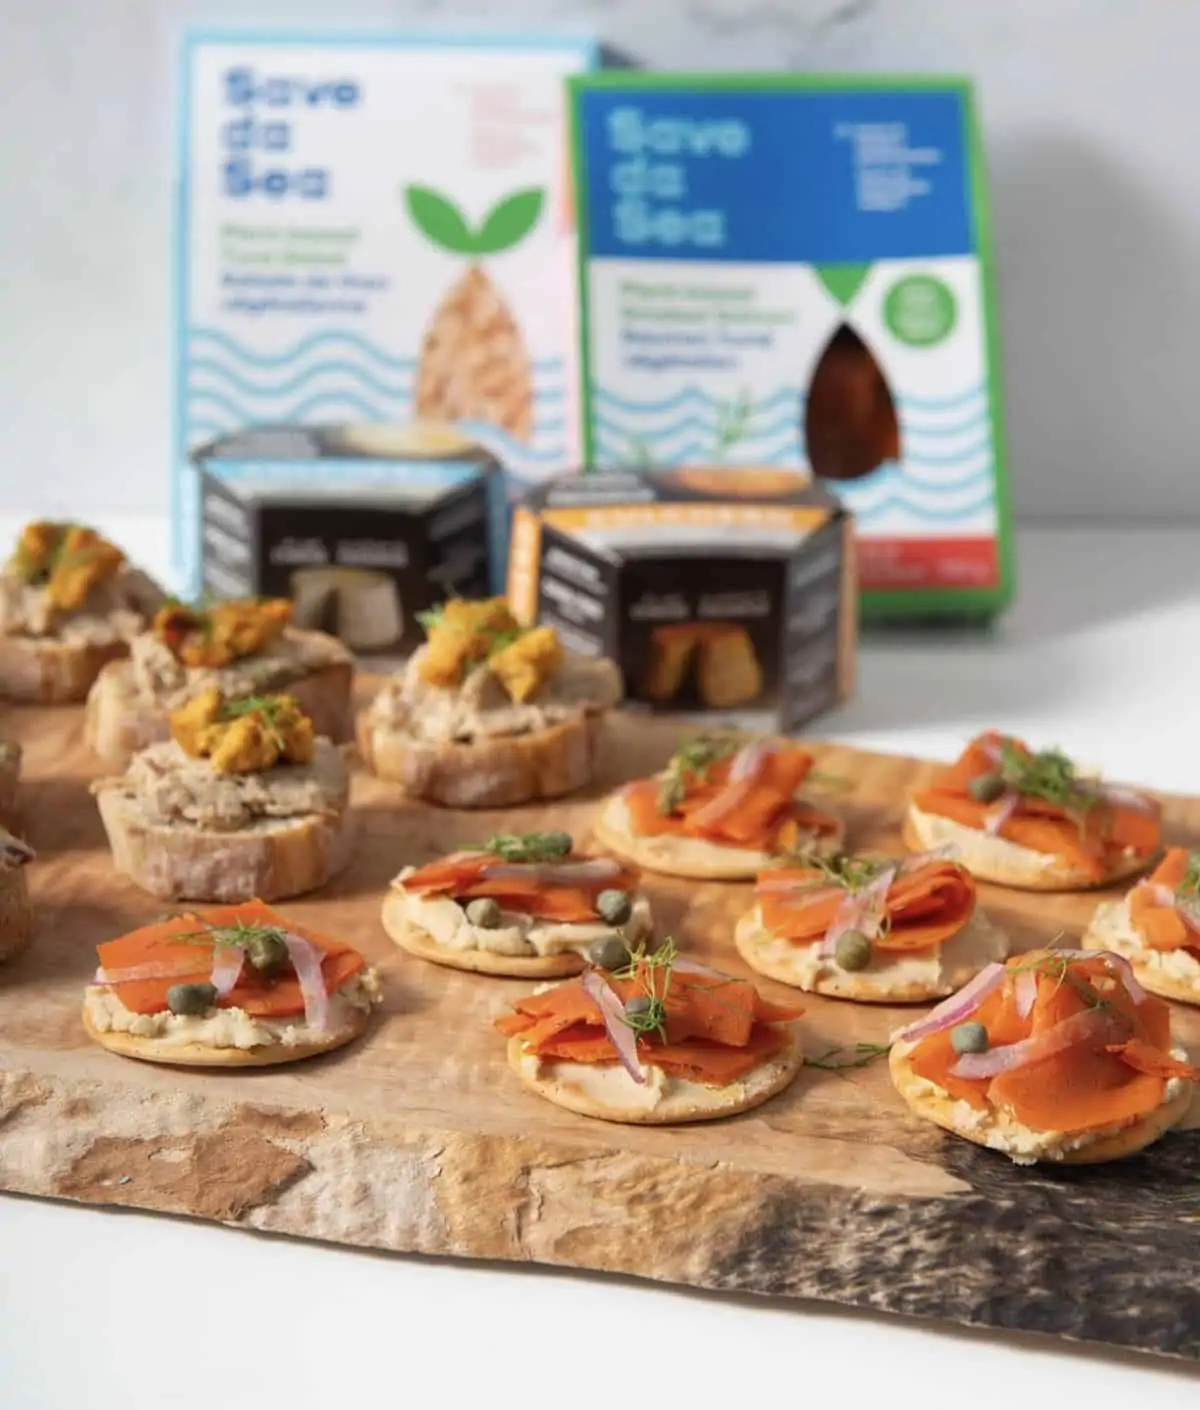 Save Da Sea brand vegan salmon served on crackers appetizer style